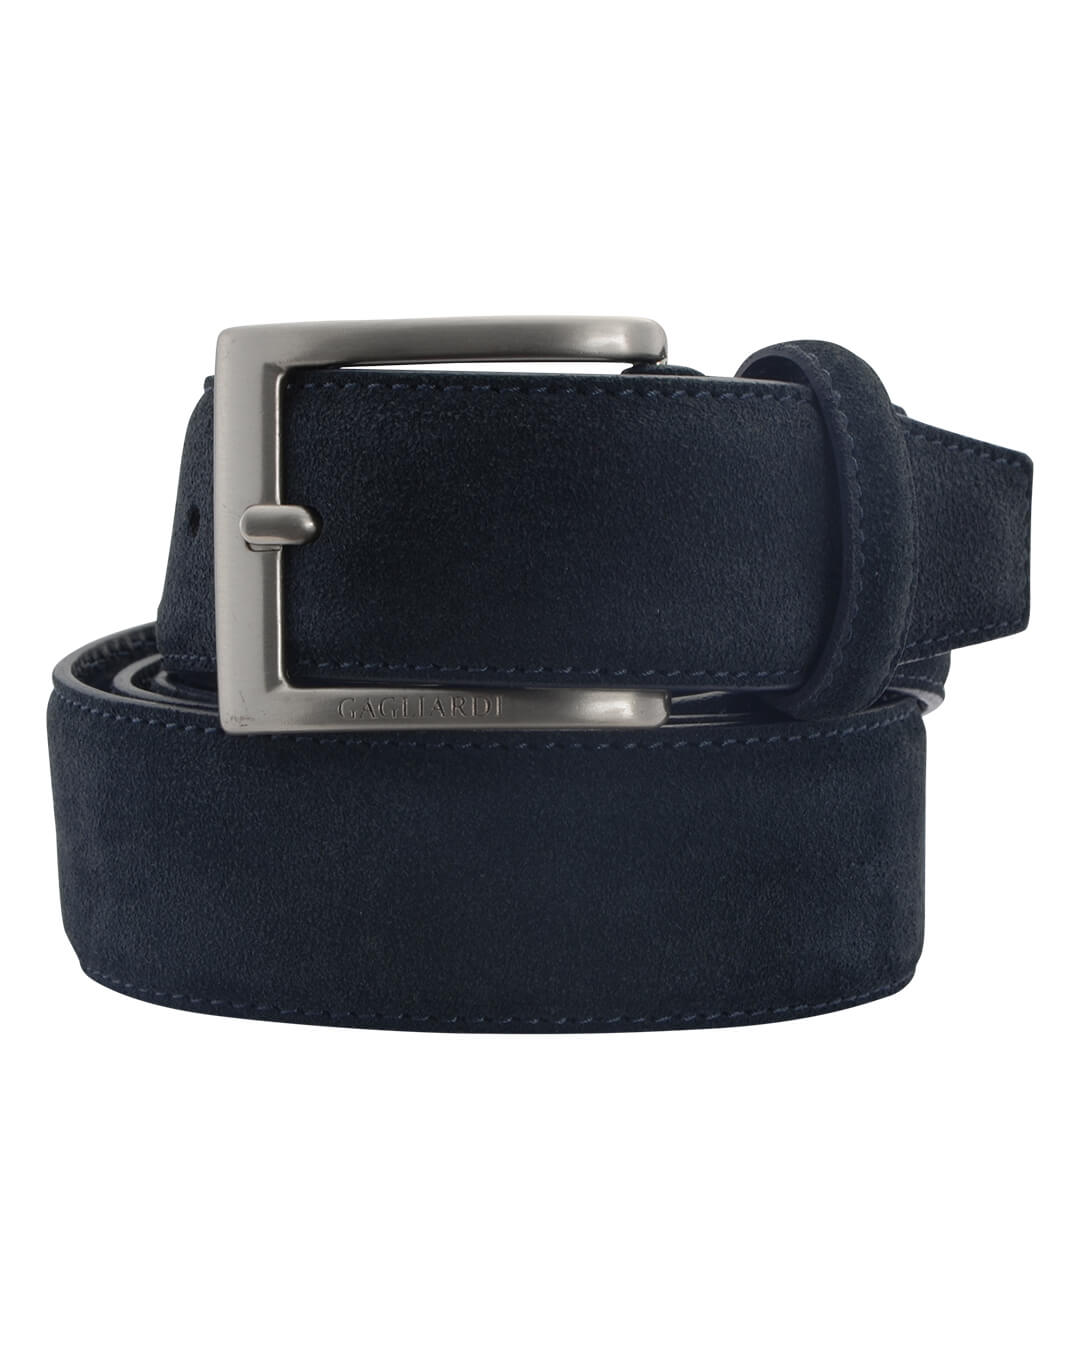 Gagliardi Belts Gagliardi Navy Suede Leather Belt With Branding On Buckle